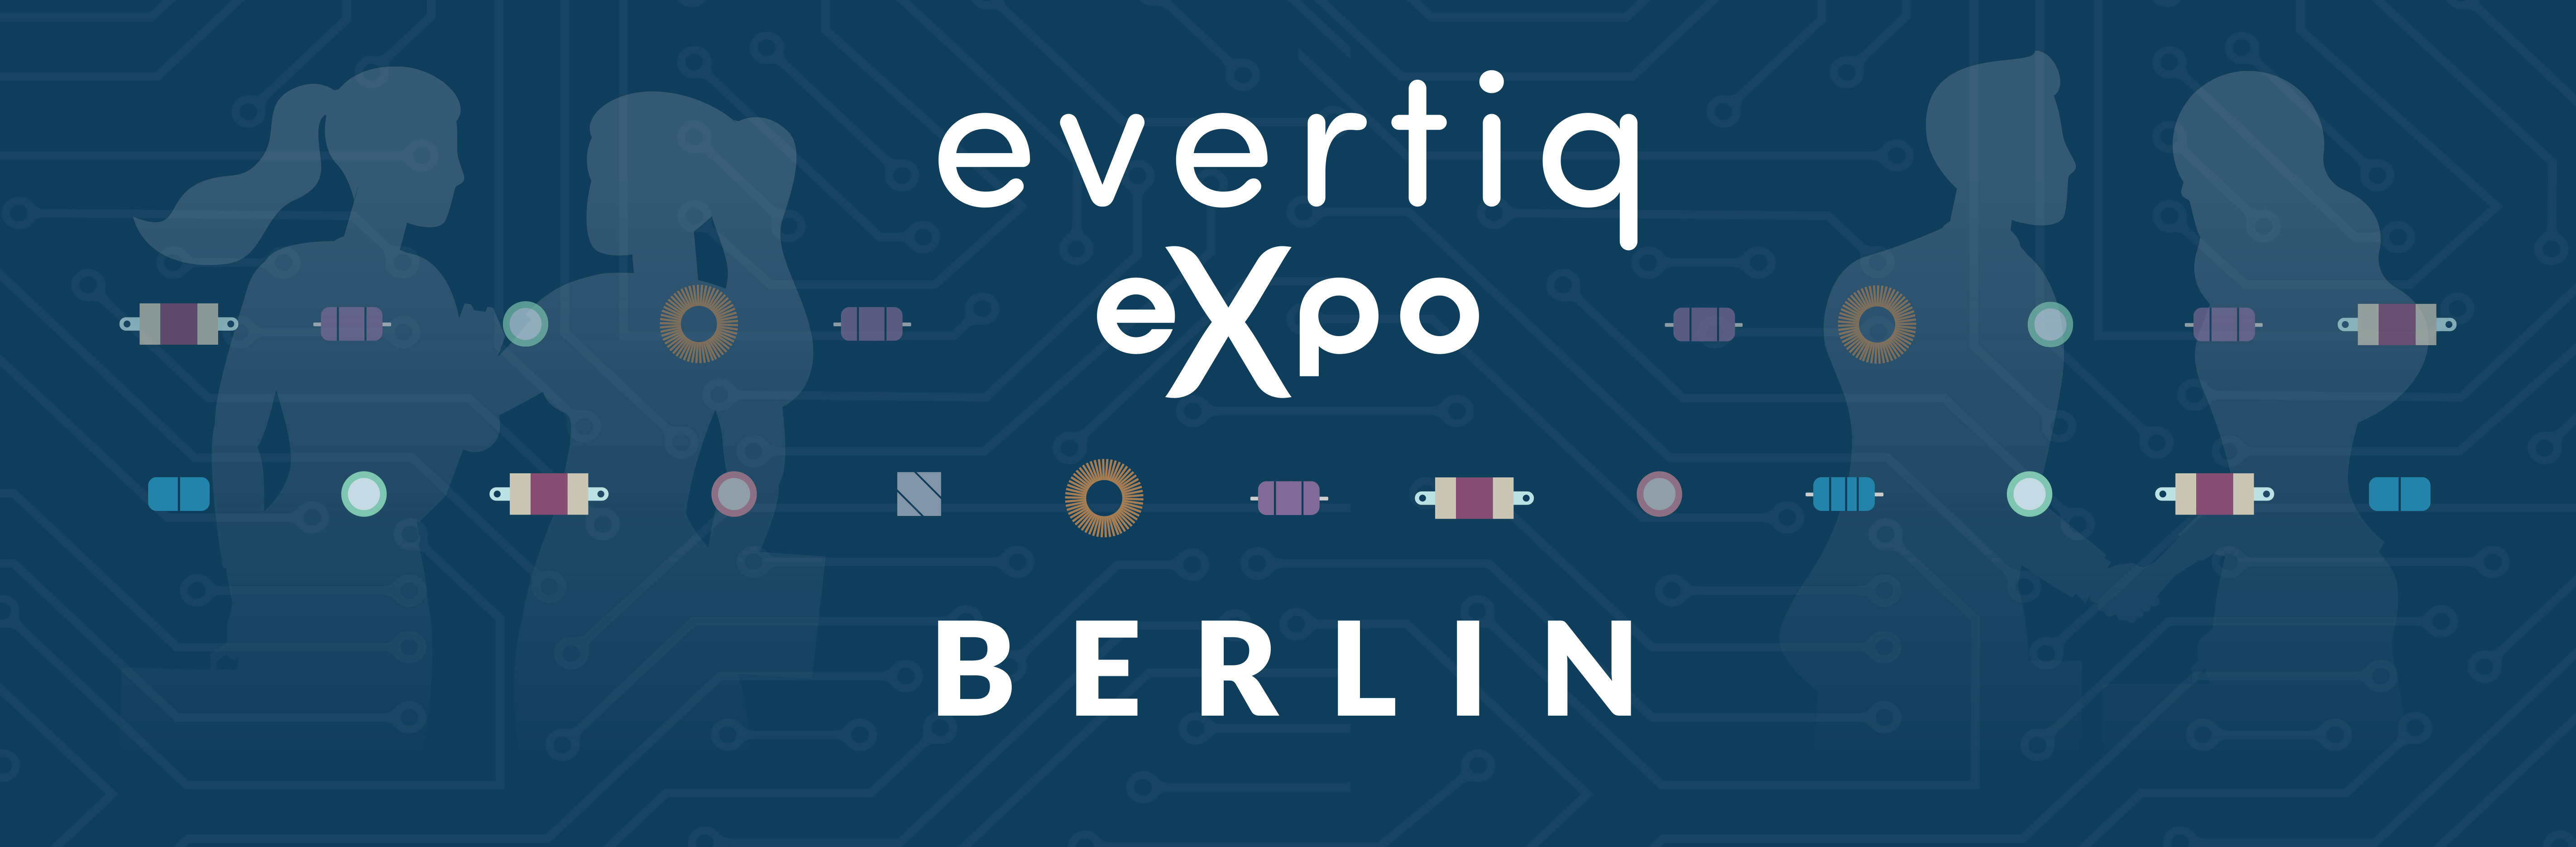 Berlin evertig expo